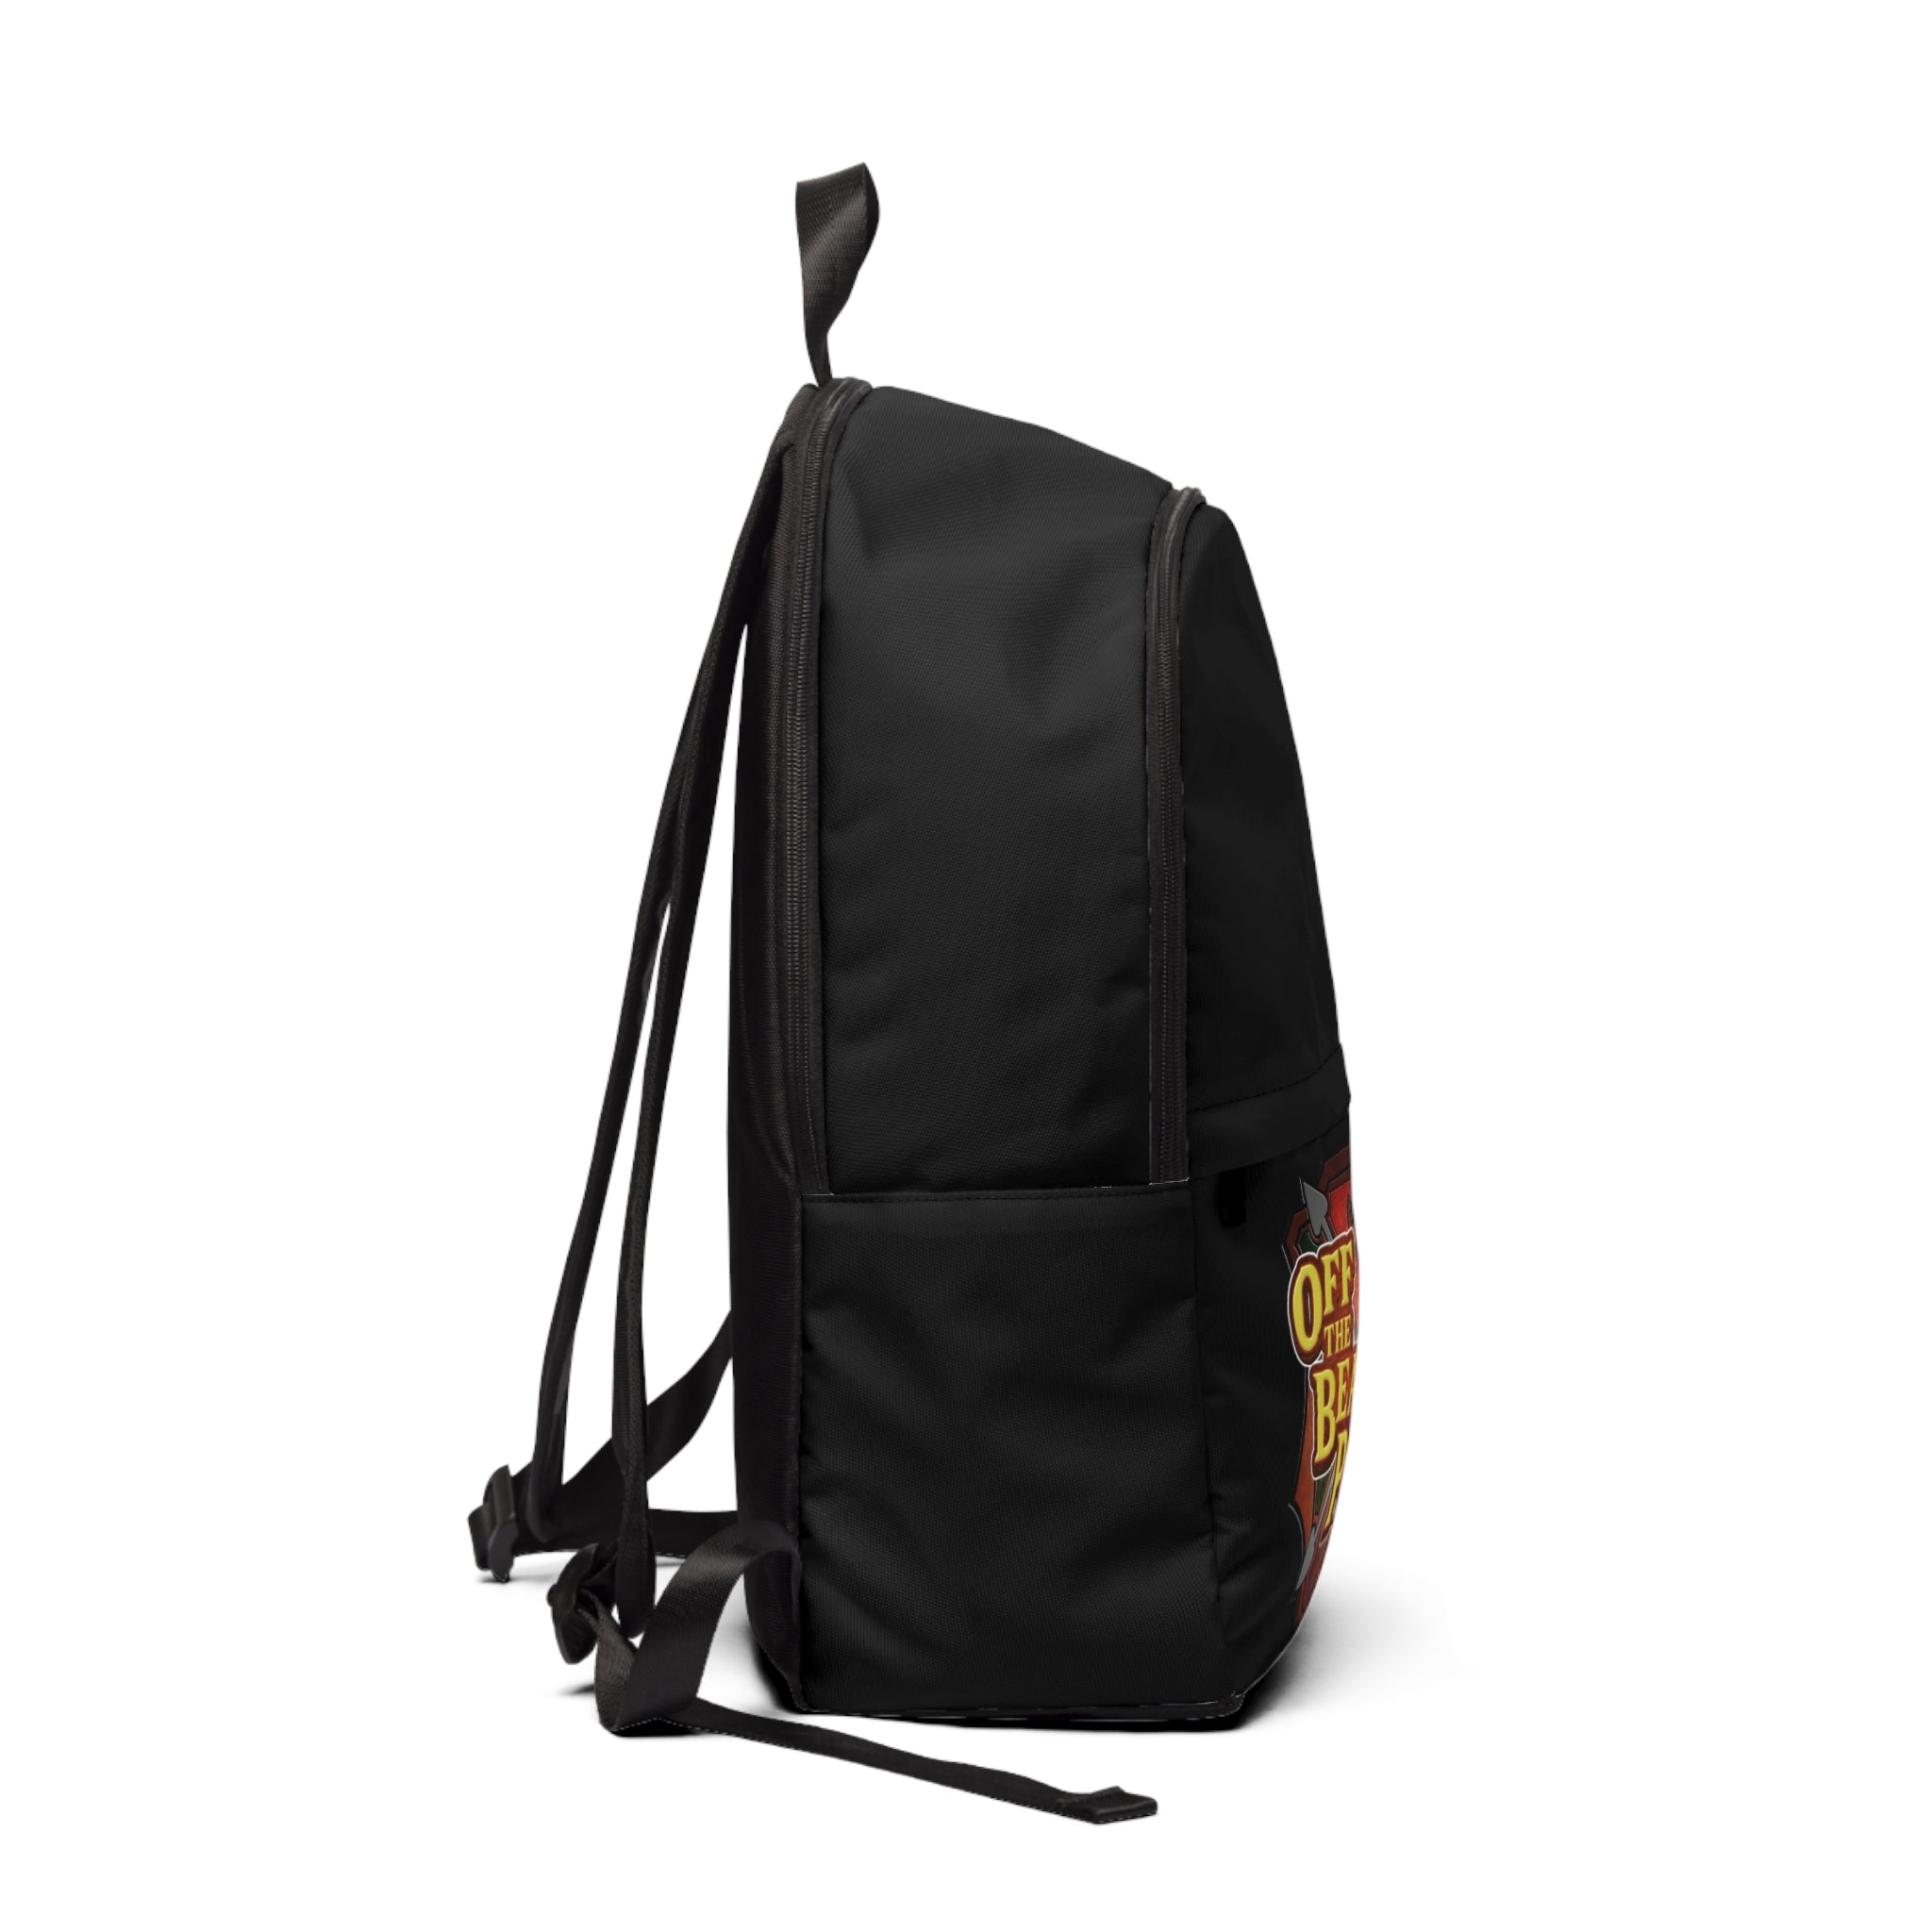 OBP Crest Fabric Backpack - Black